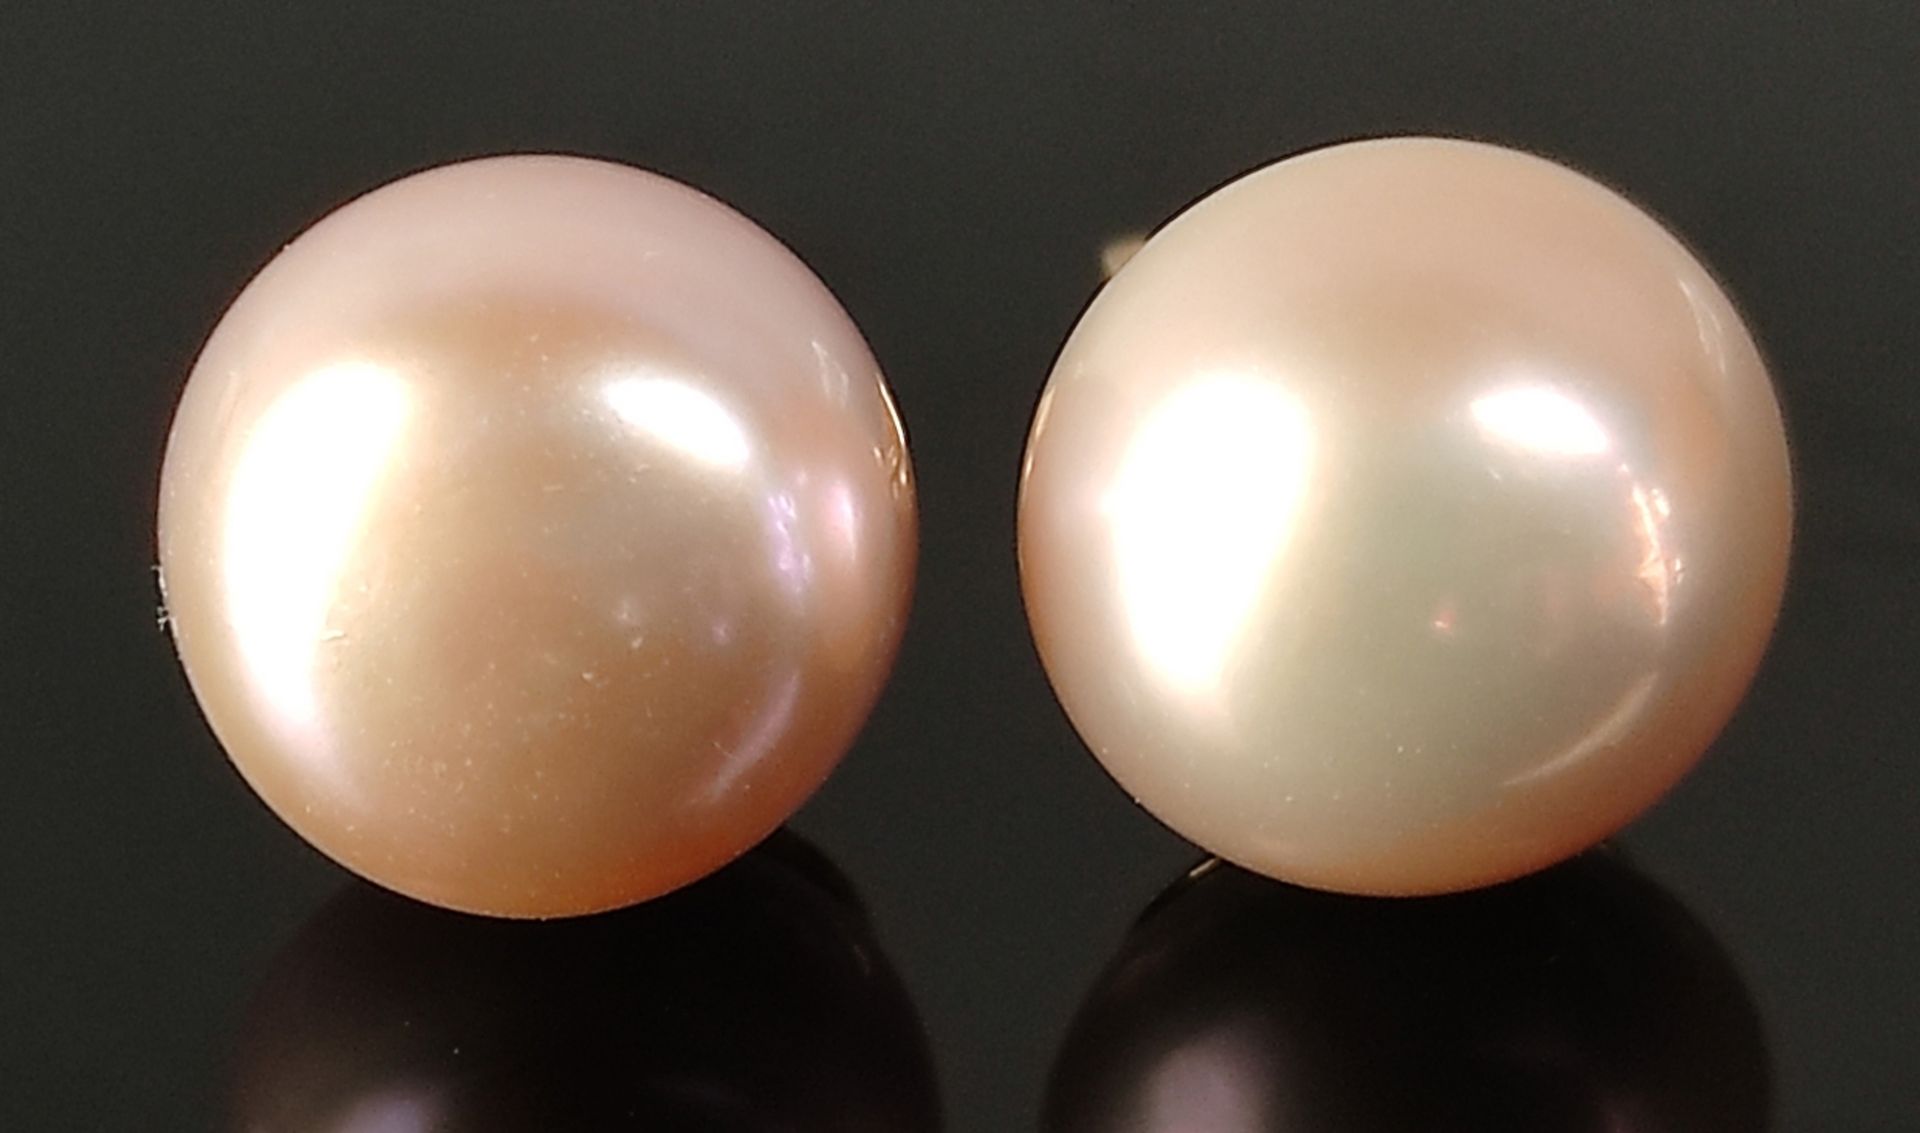 Paar Ohrstecker, große Perlen, Durchmesser ca. 10 mm, Gewicht gesamt 3,4gPair of stud earrings,